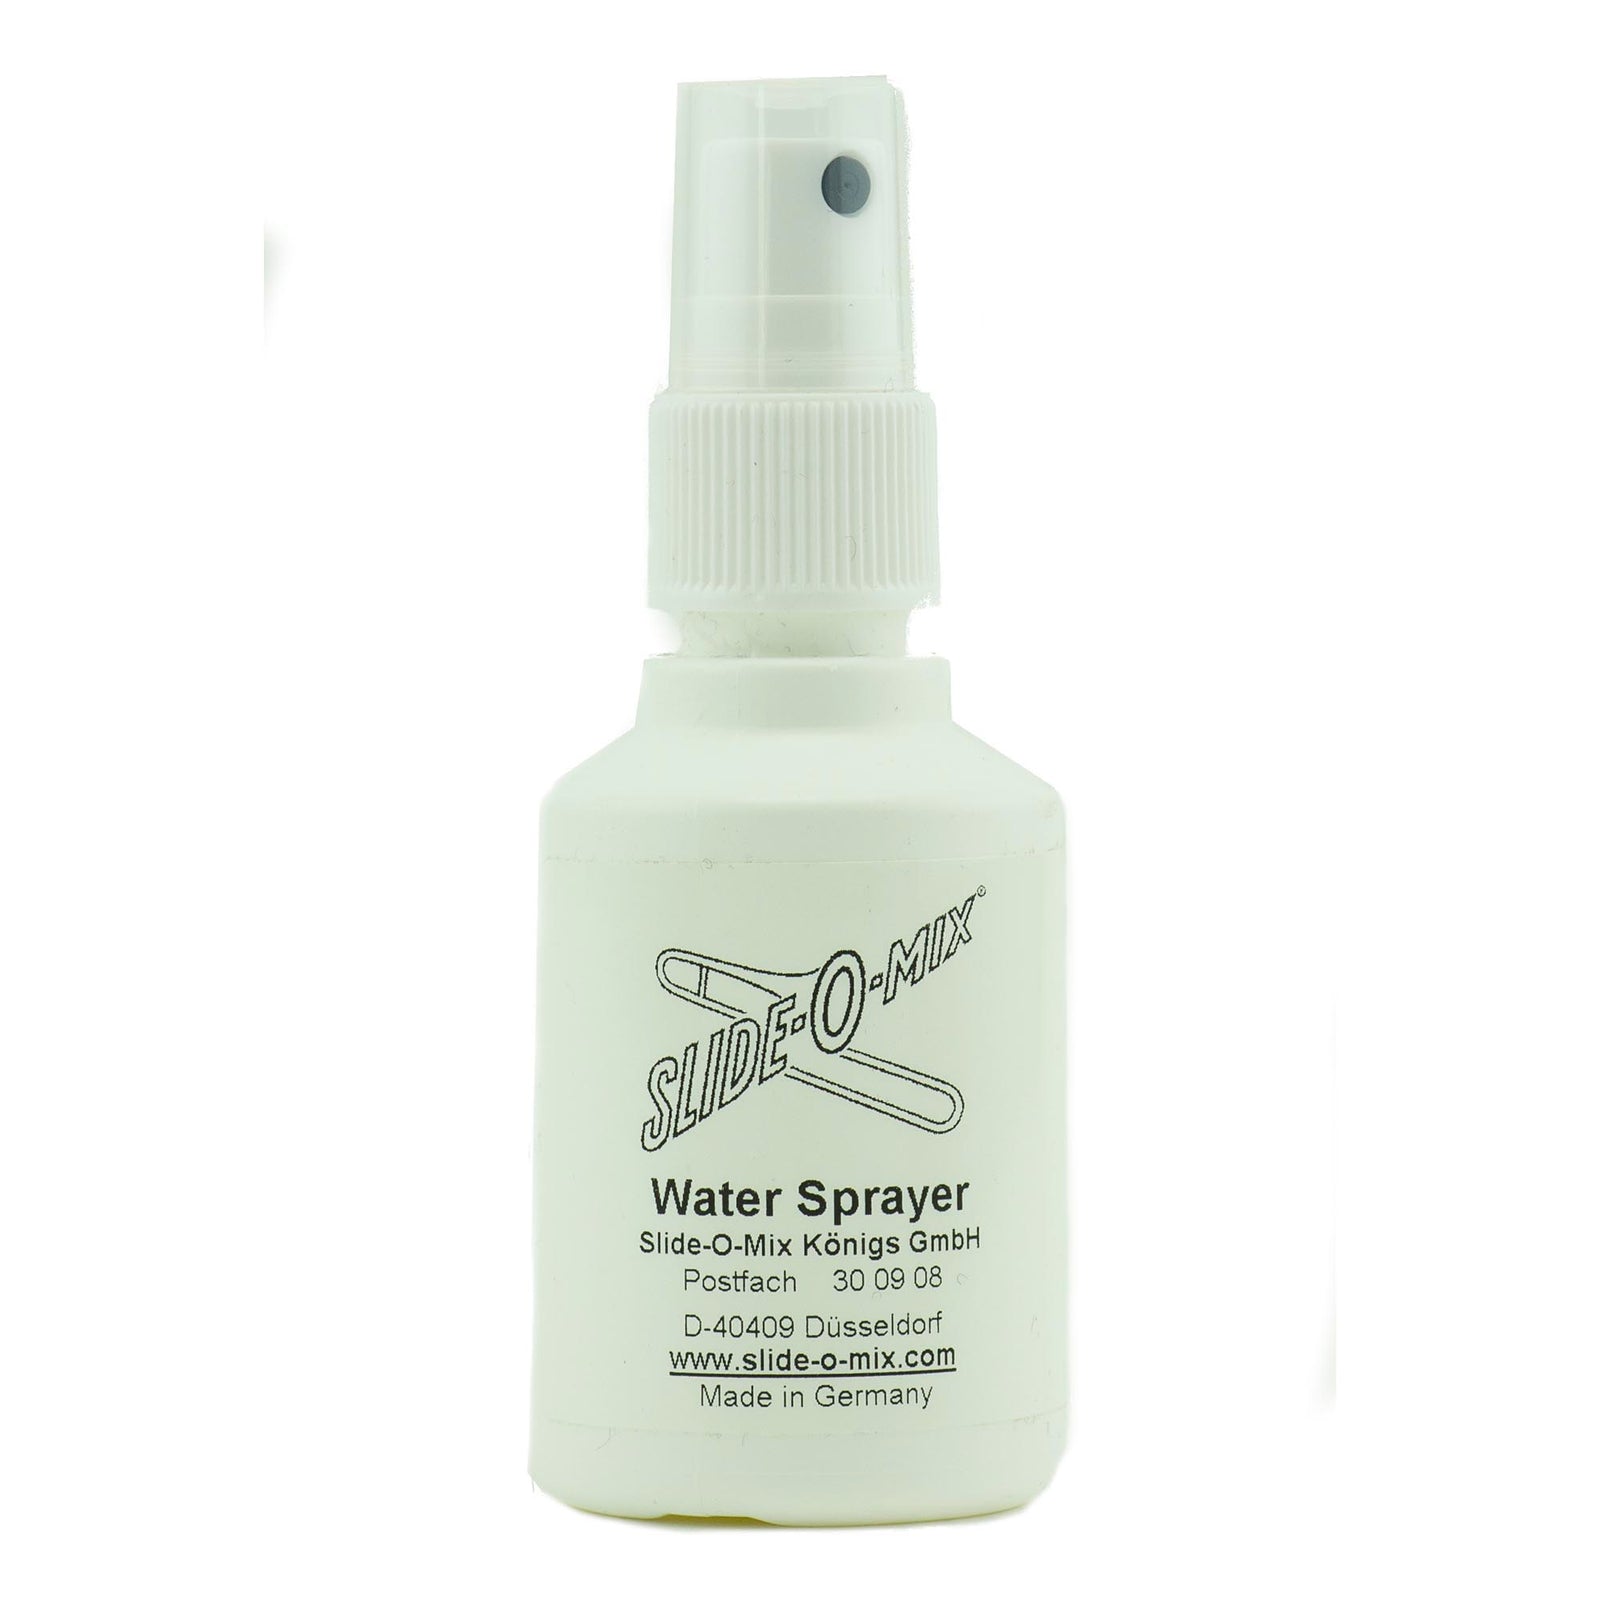 Slide-O-Mix Water Sprayer Bottle